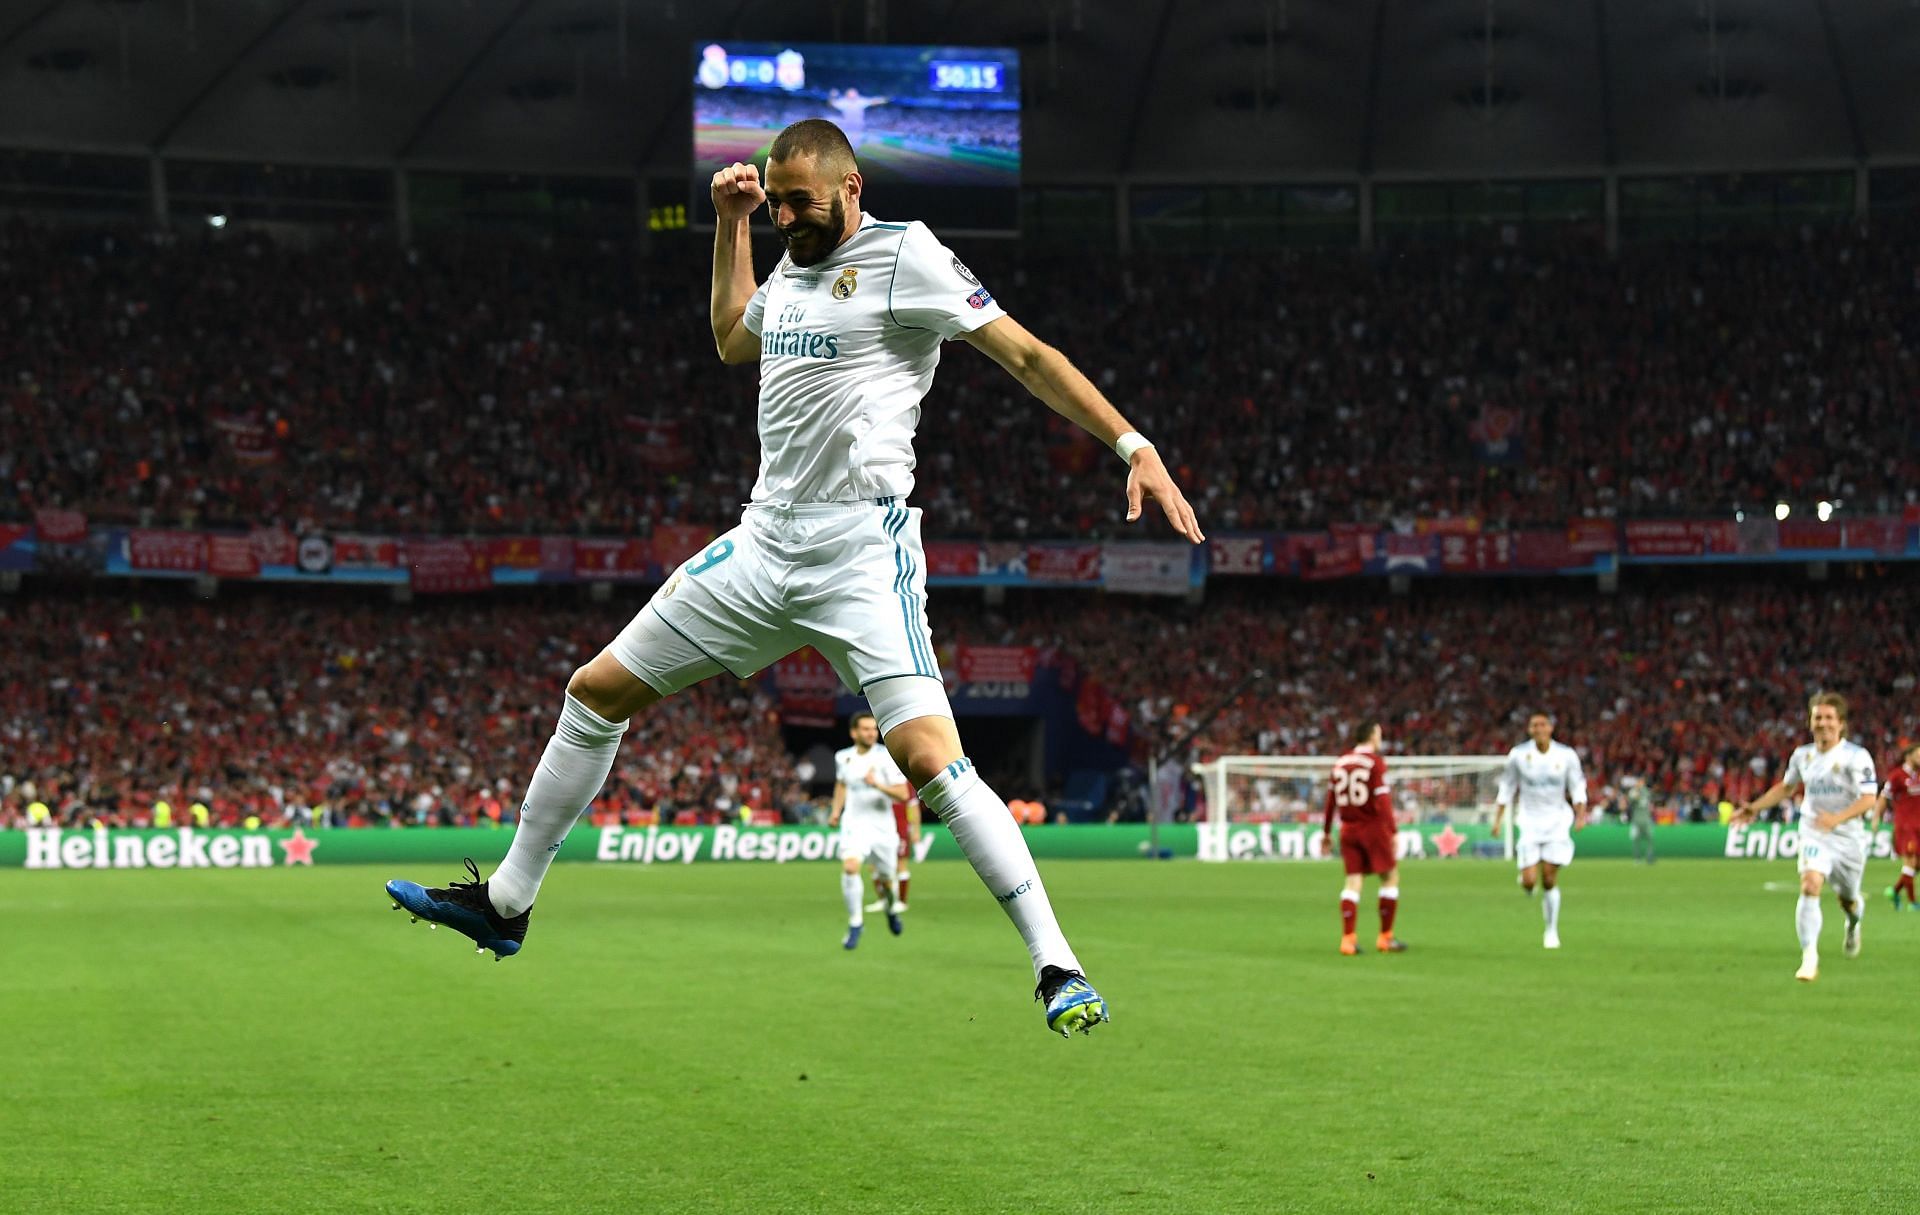 Karim Benzema celebrating a goal in the 2018 UEFA Champions League Final